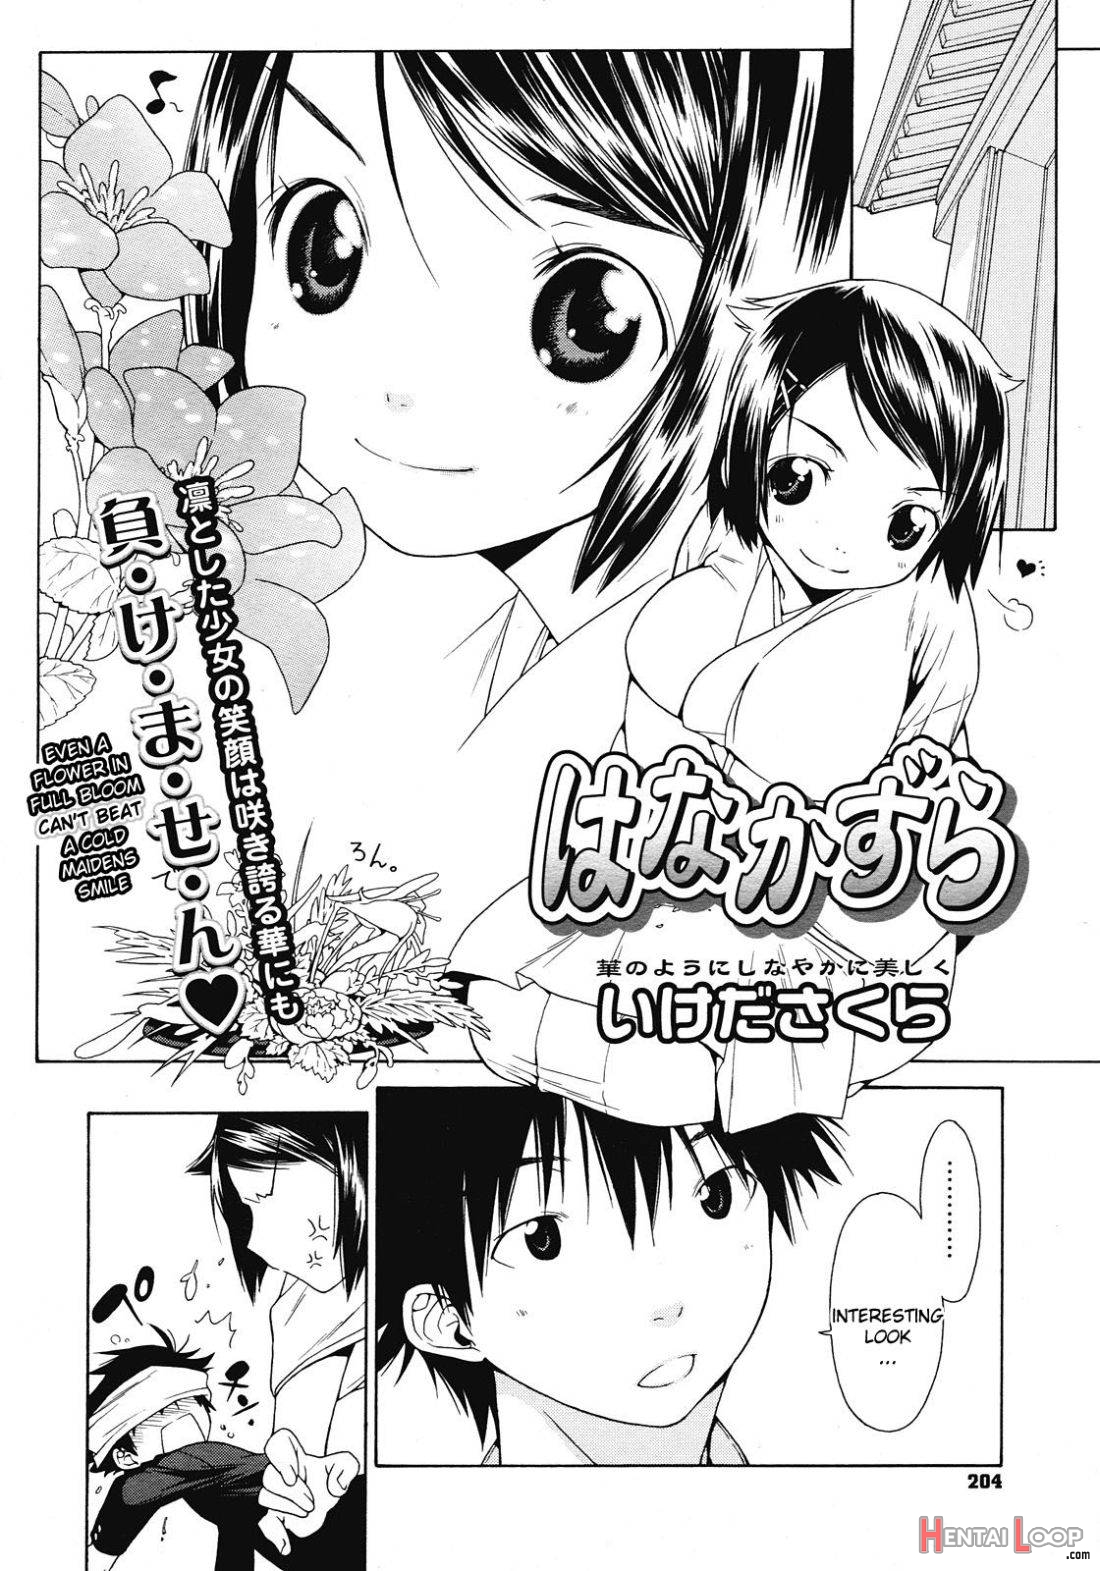 Hanakazura page 2